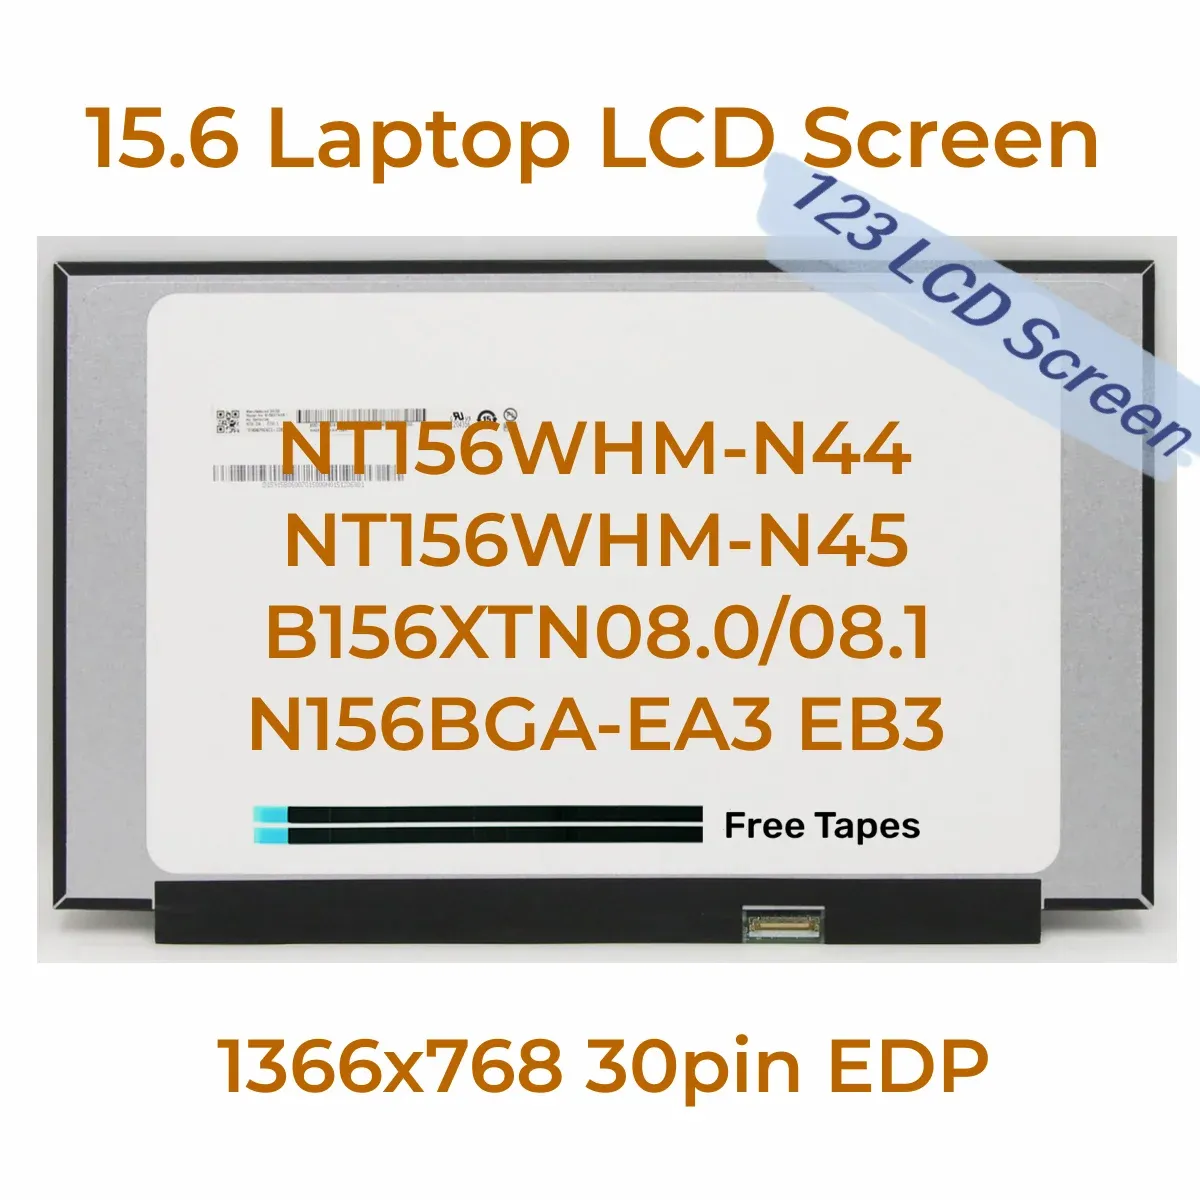 Skärm 15.6 "LCD Display NT156WHMN44 NT156WHMN45 B156XTN08.0 1 N156BGAEA3 EB3 Laptop Matrix 1366*768 EDP 30 PINS